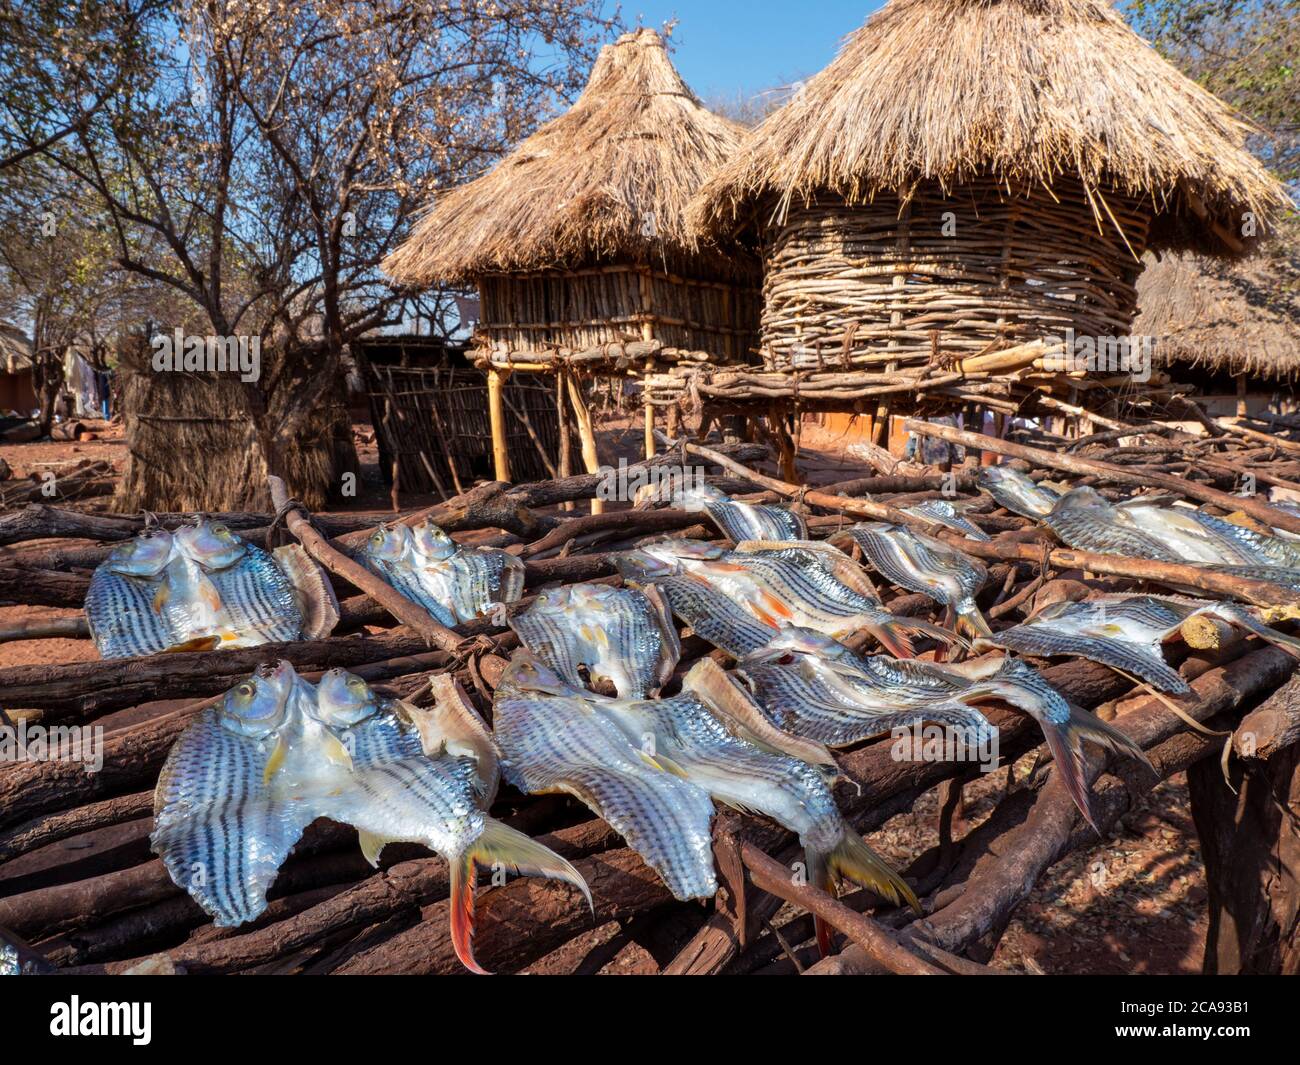 The days catch of fish drying in the sun in the fishing village of Musamba, on the shoreline of Lake Kariba, Zimbabwe, Africa Stock Photo